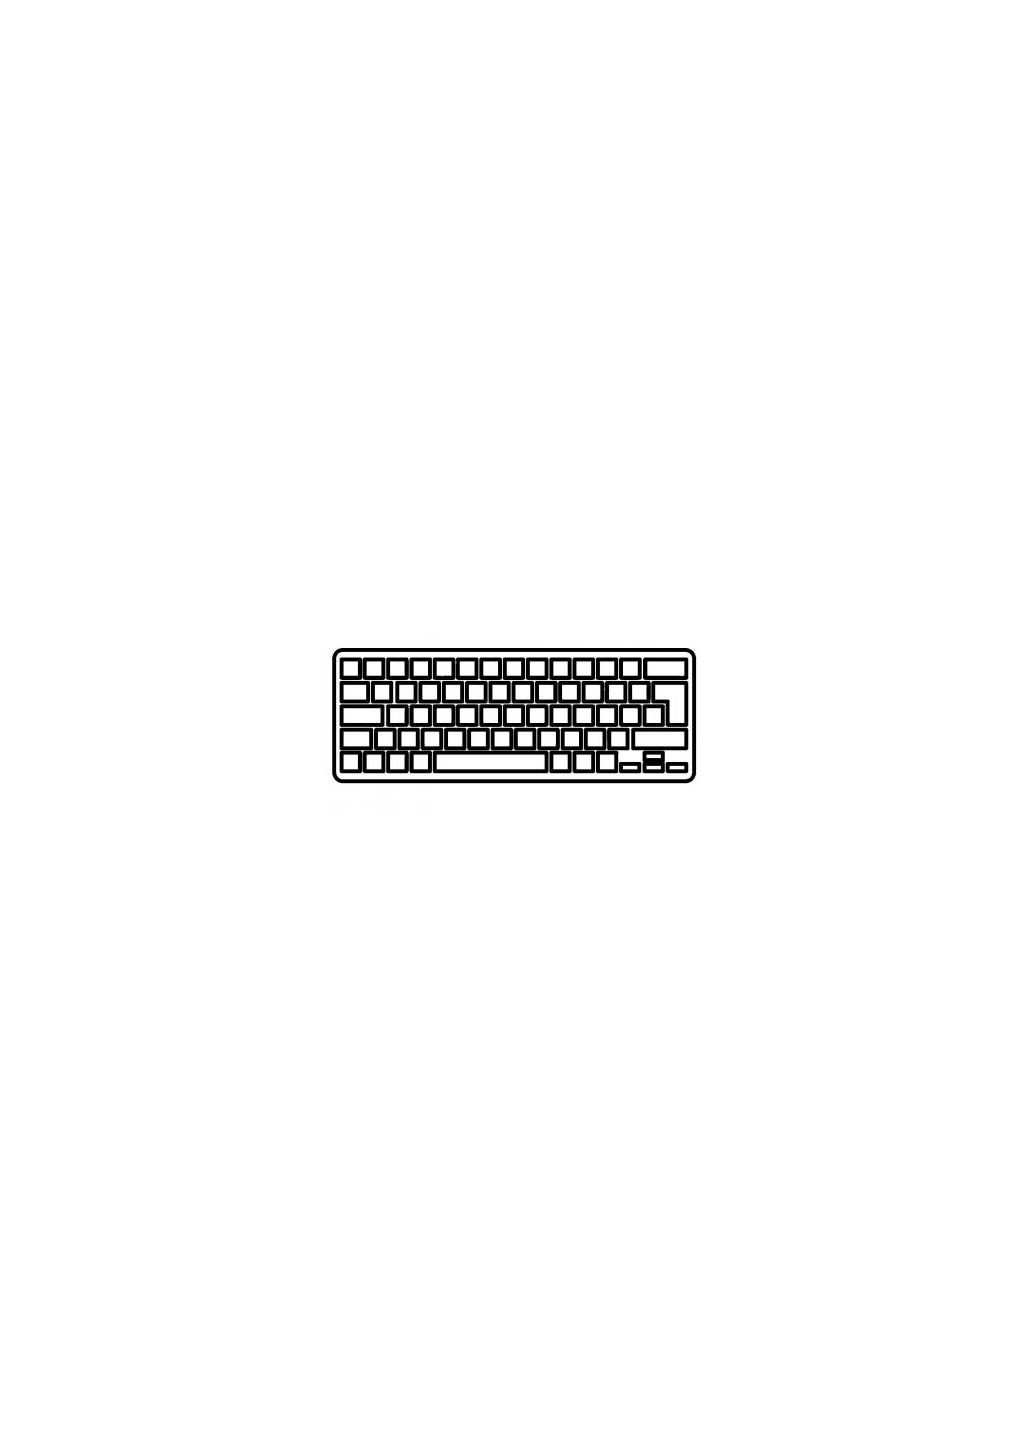 Клавиатура ноутбука (A43535) Toshiba satellite m20 series черная ua (276706389)